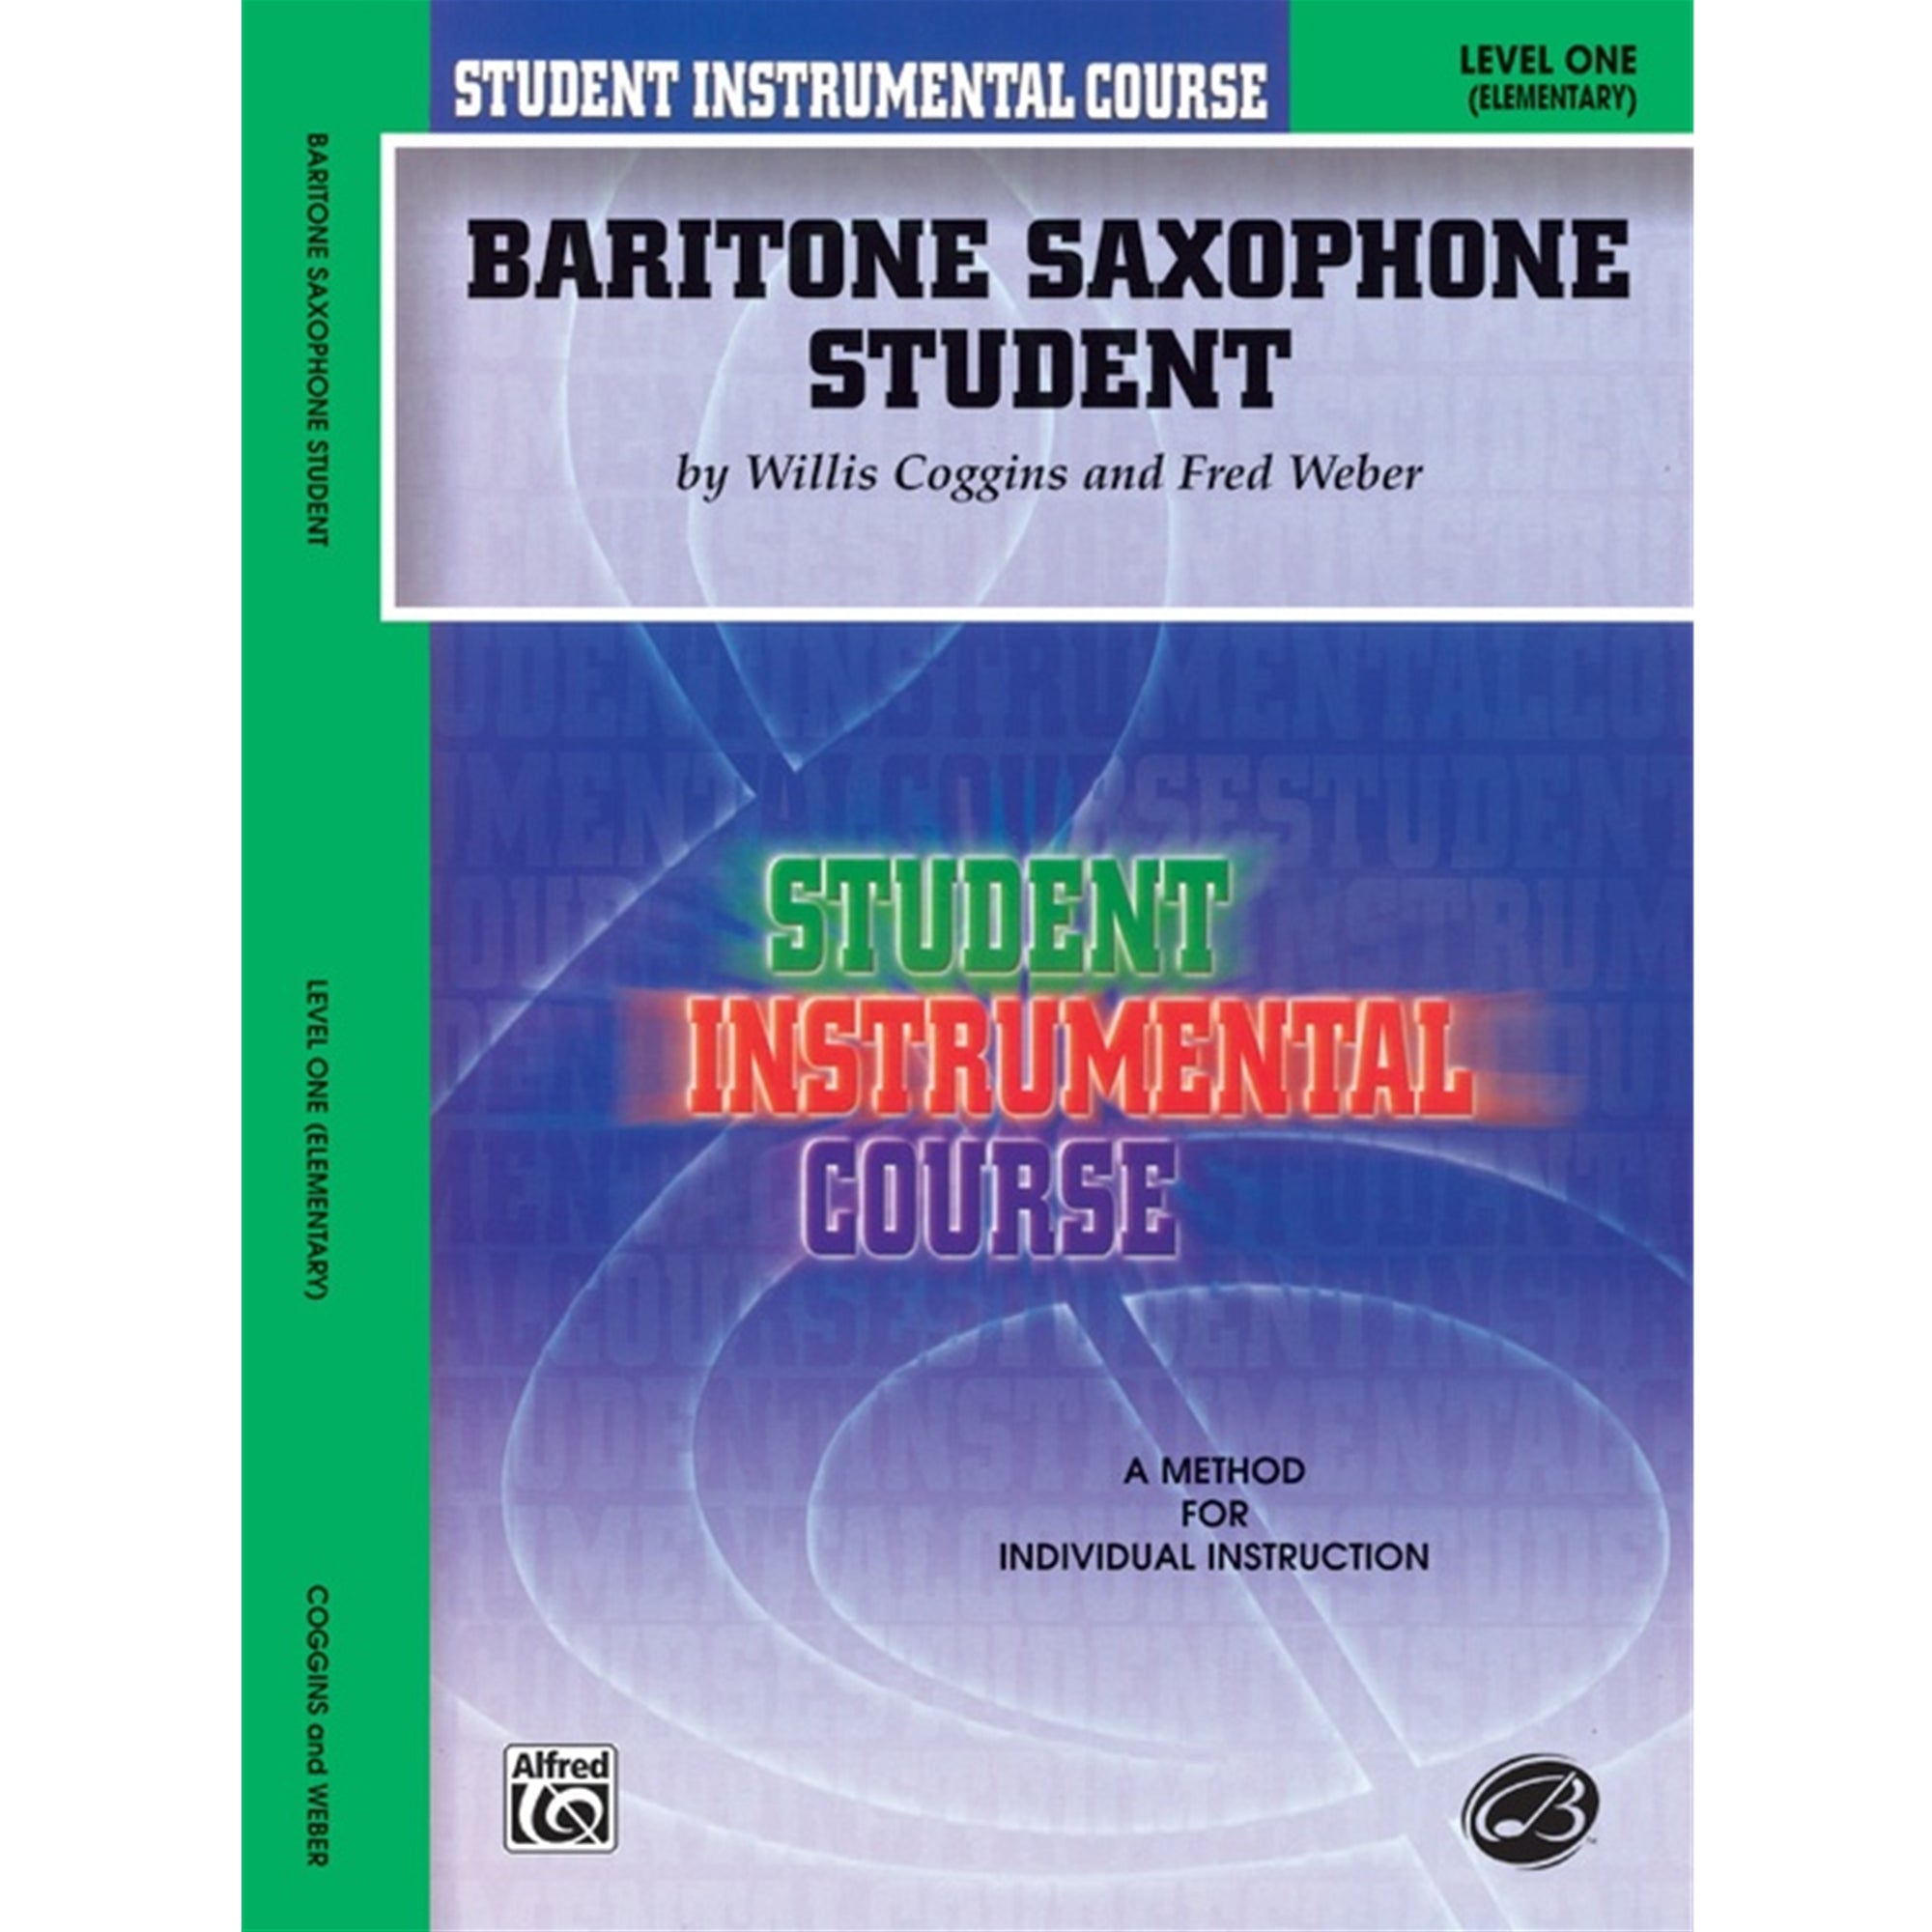 ALFRED 00-BIC00141A Student Instrumental Course: Baritone Saxophone Student, Level I [Saxophone]